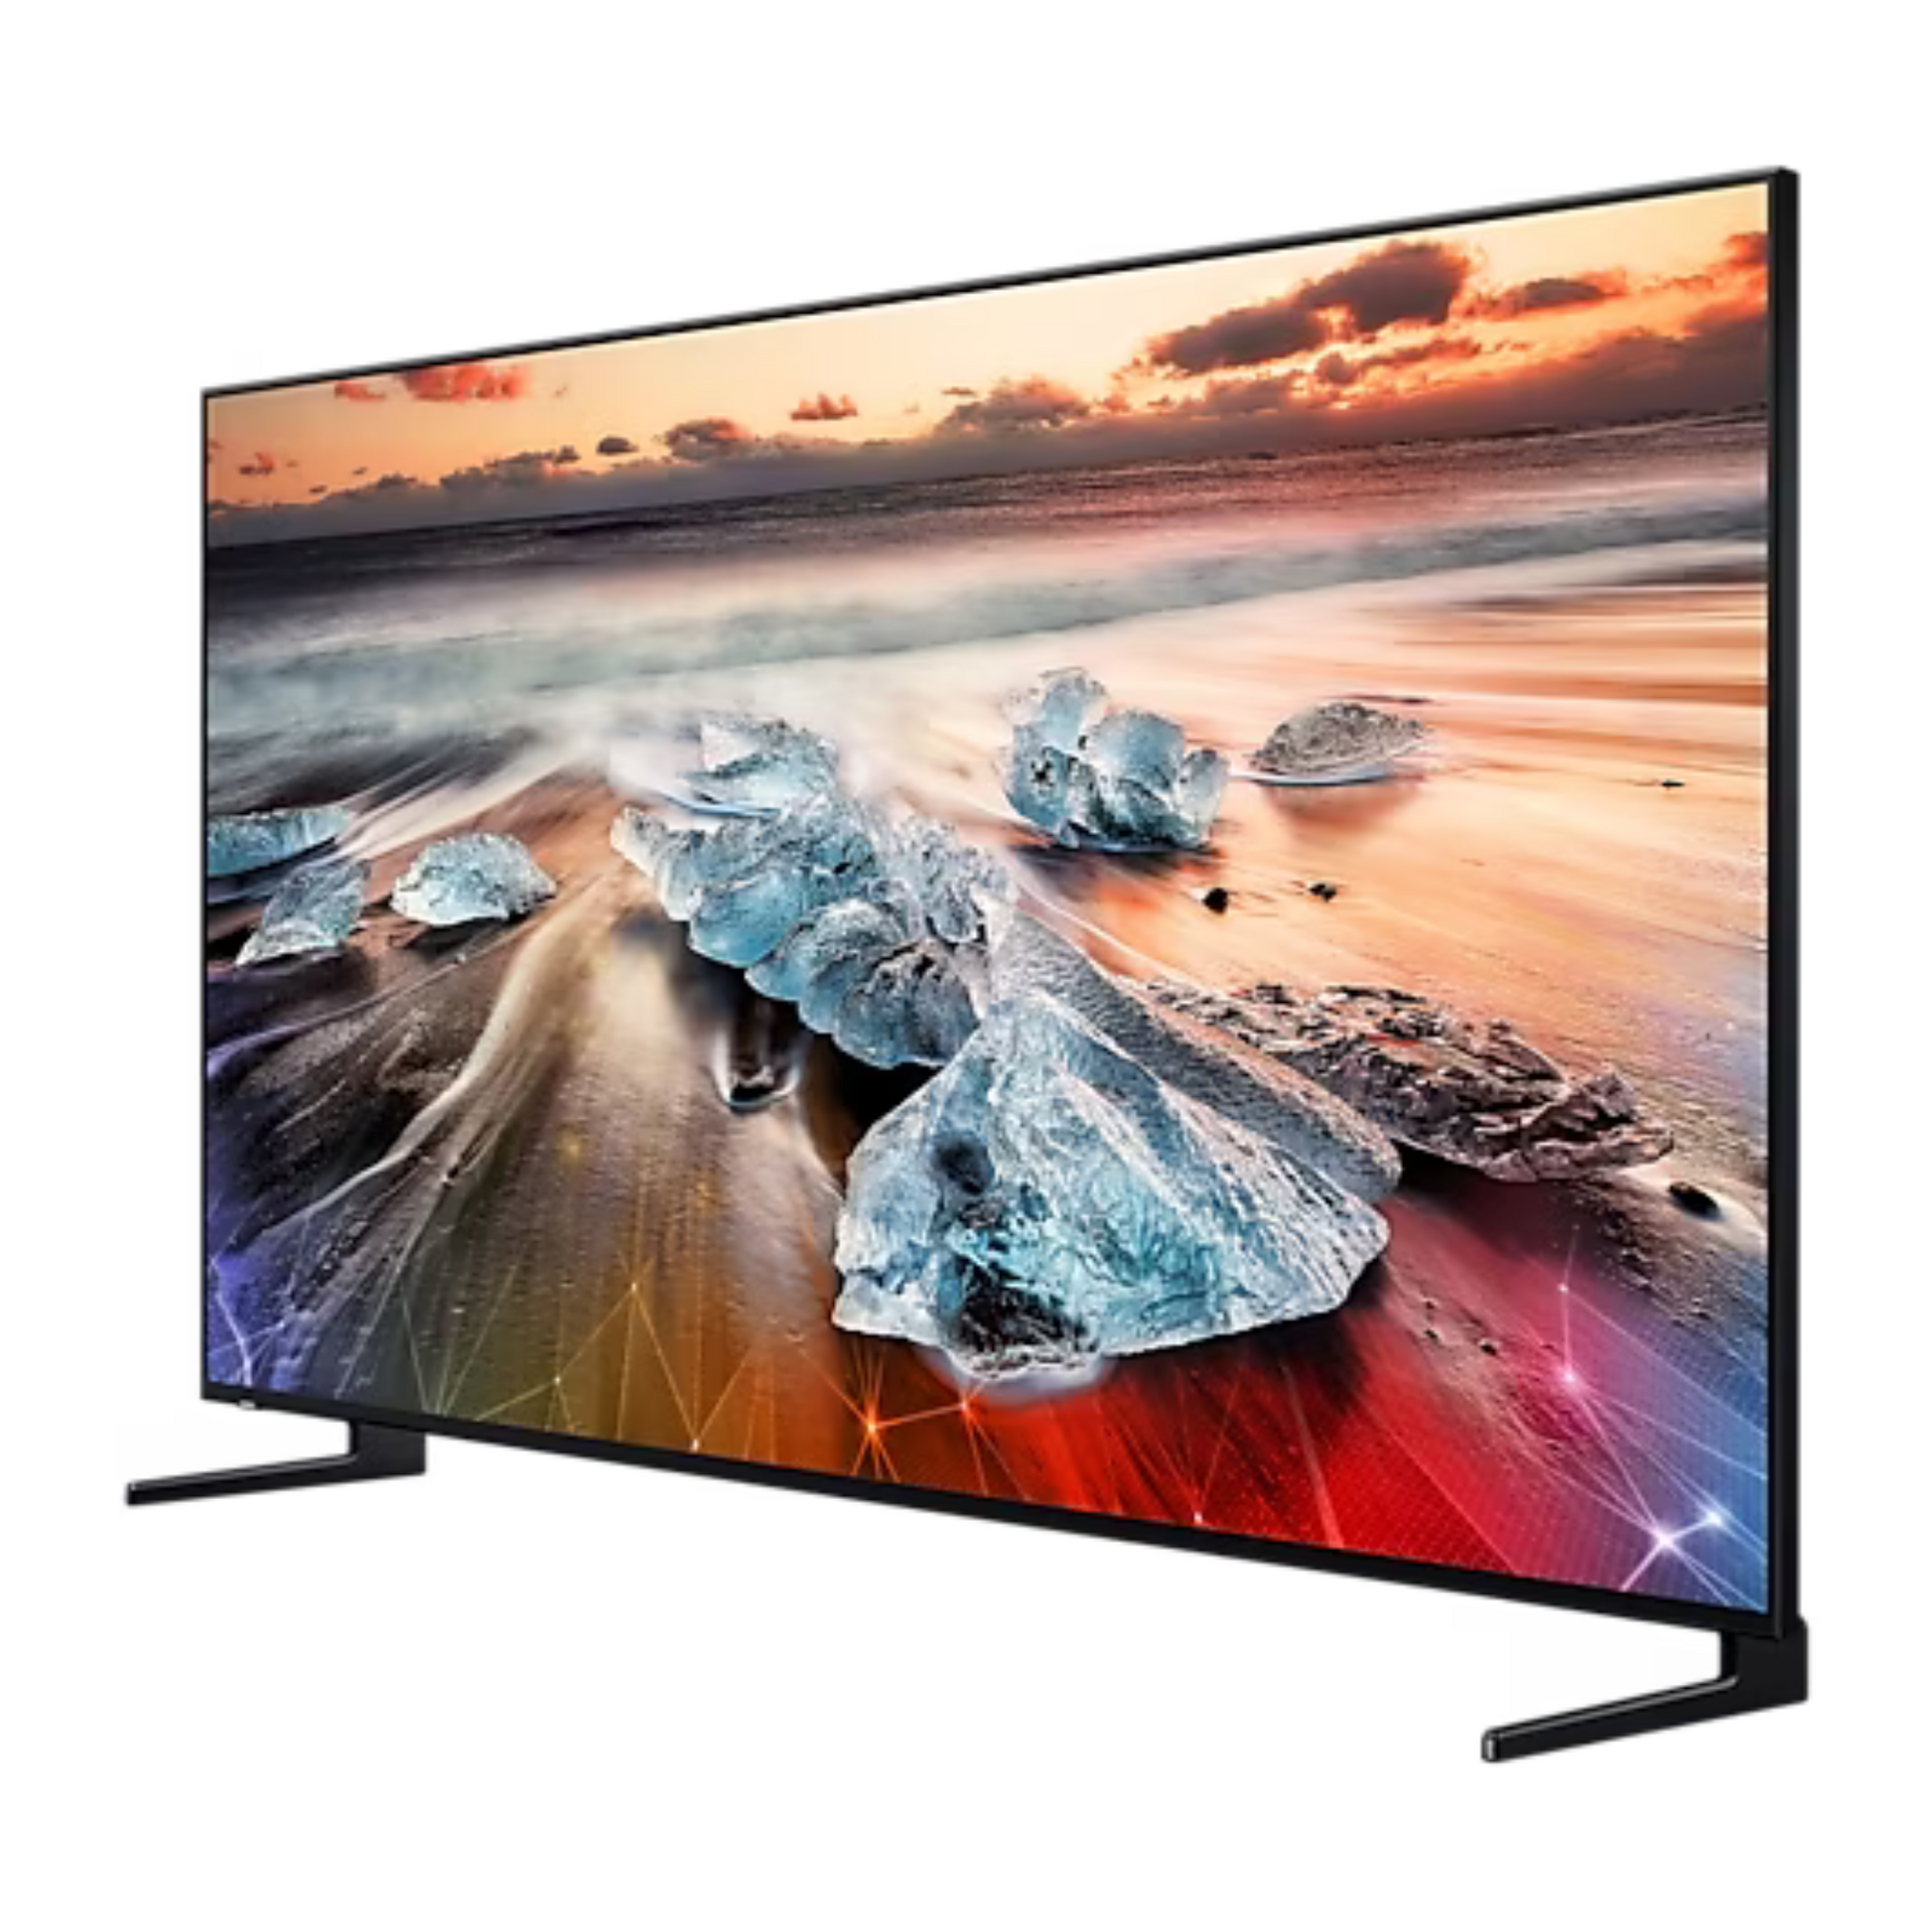 Samsung 75 inch Smart QLED TV - 8K, 75Q900R